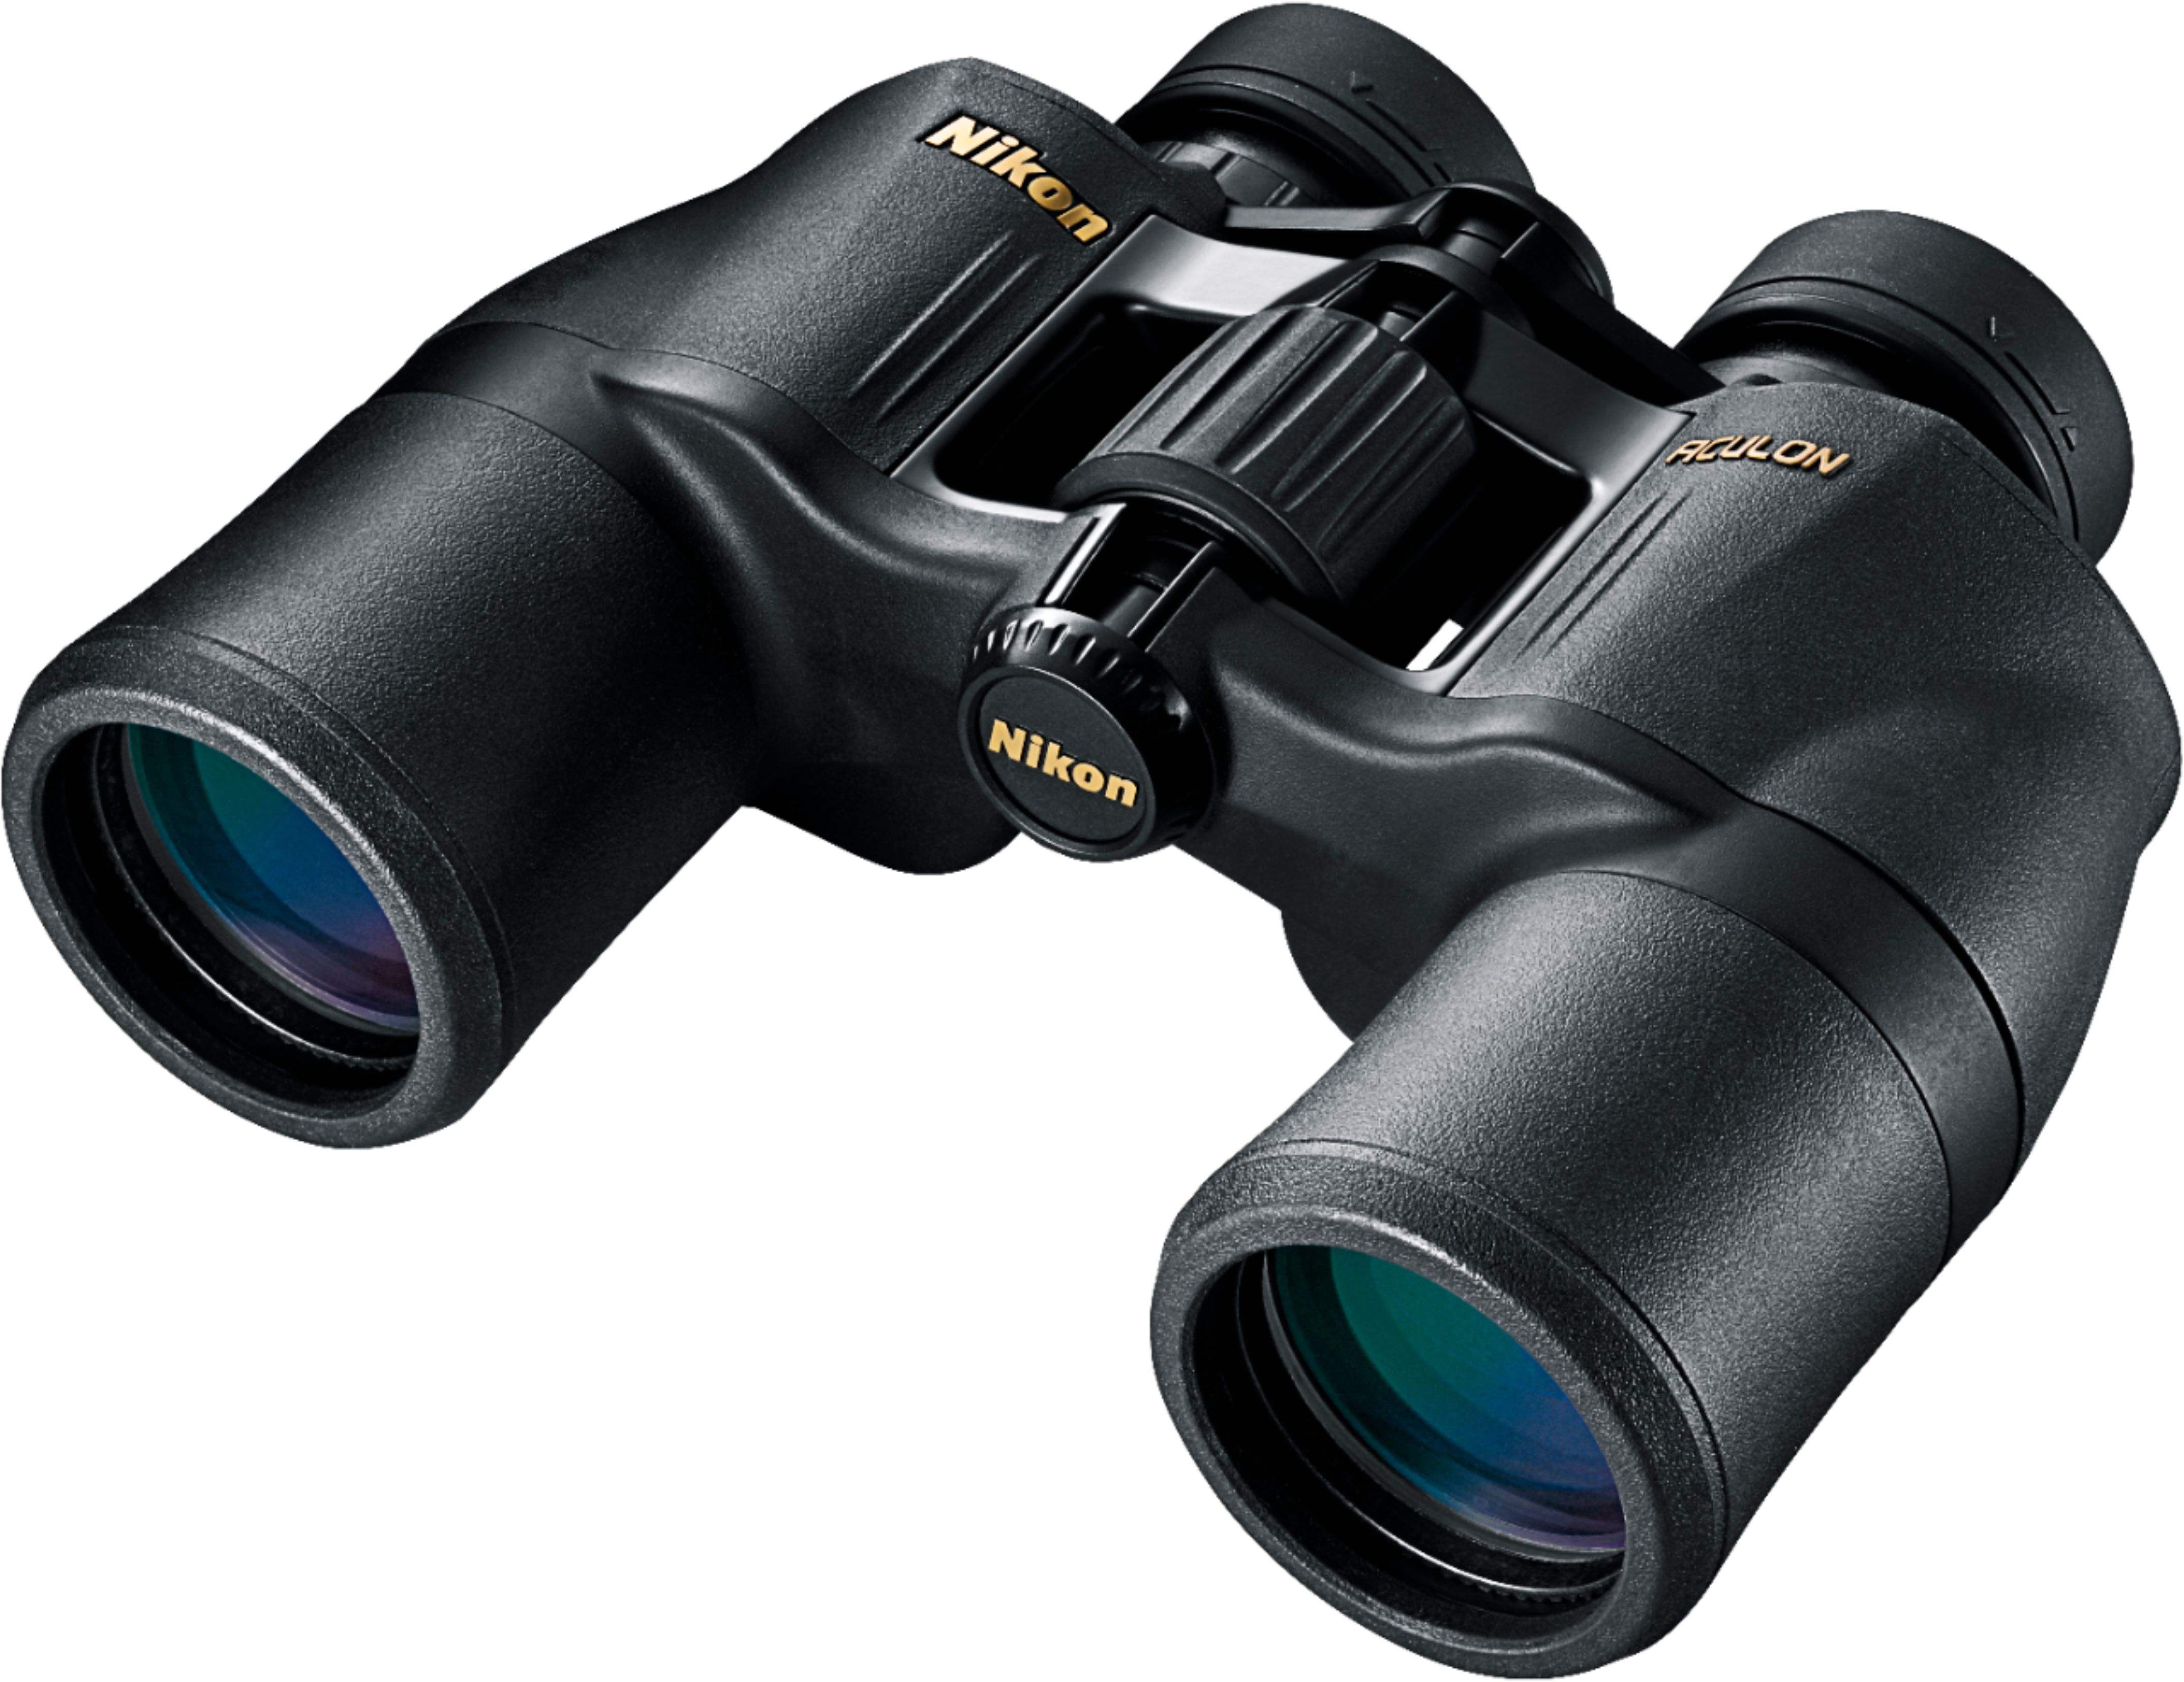 Angle View: Nikon - ACULON 10 x 42 Binoculars - Black